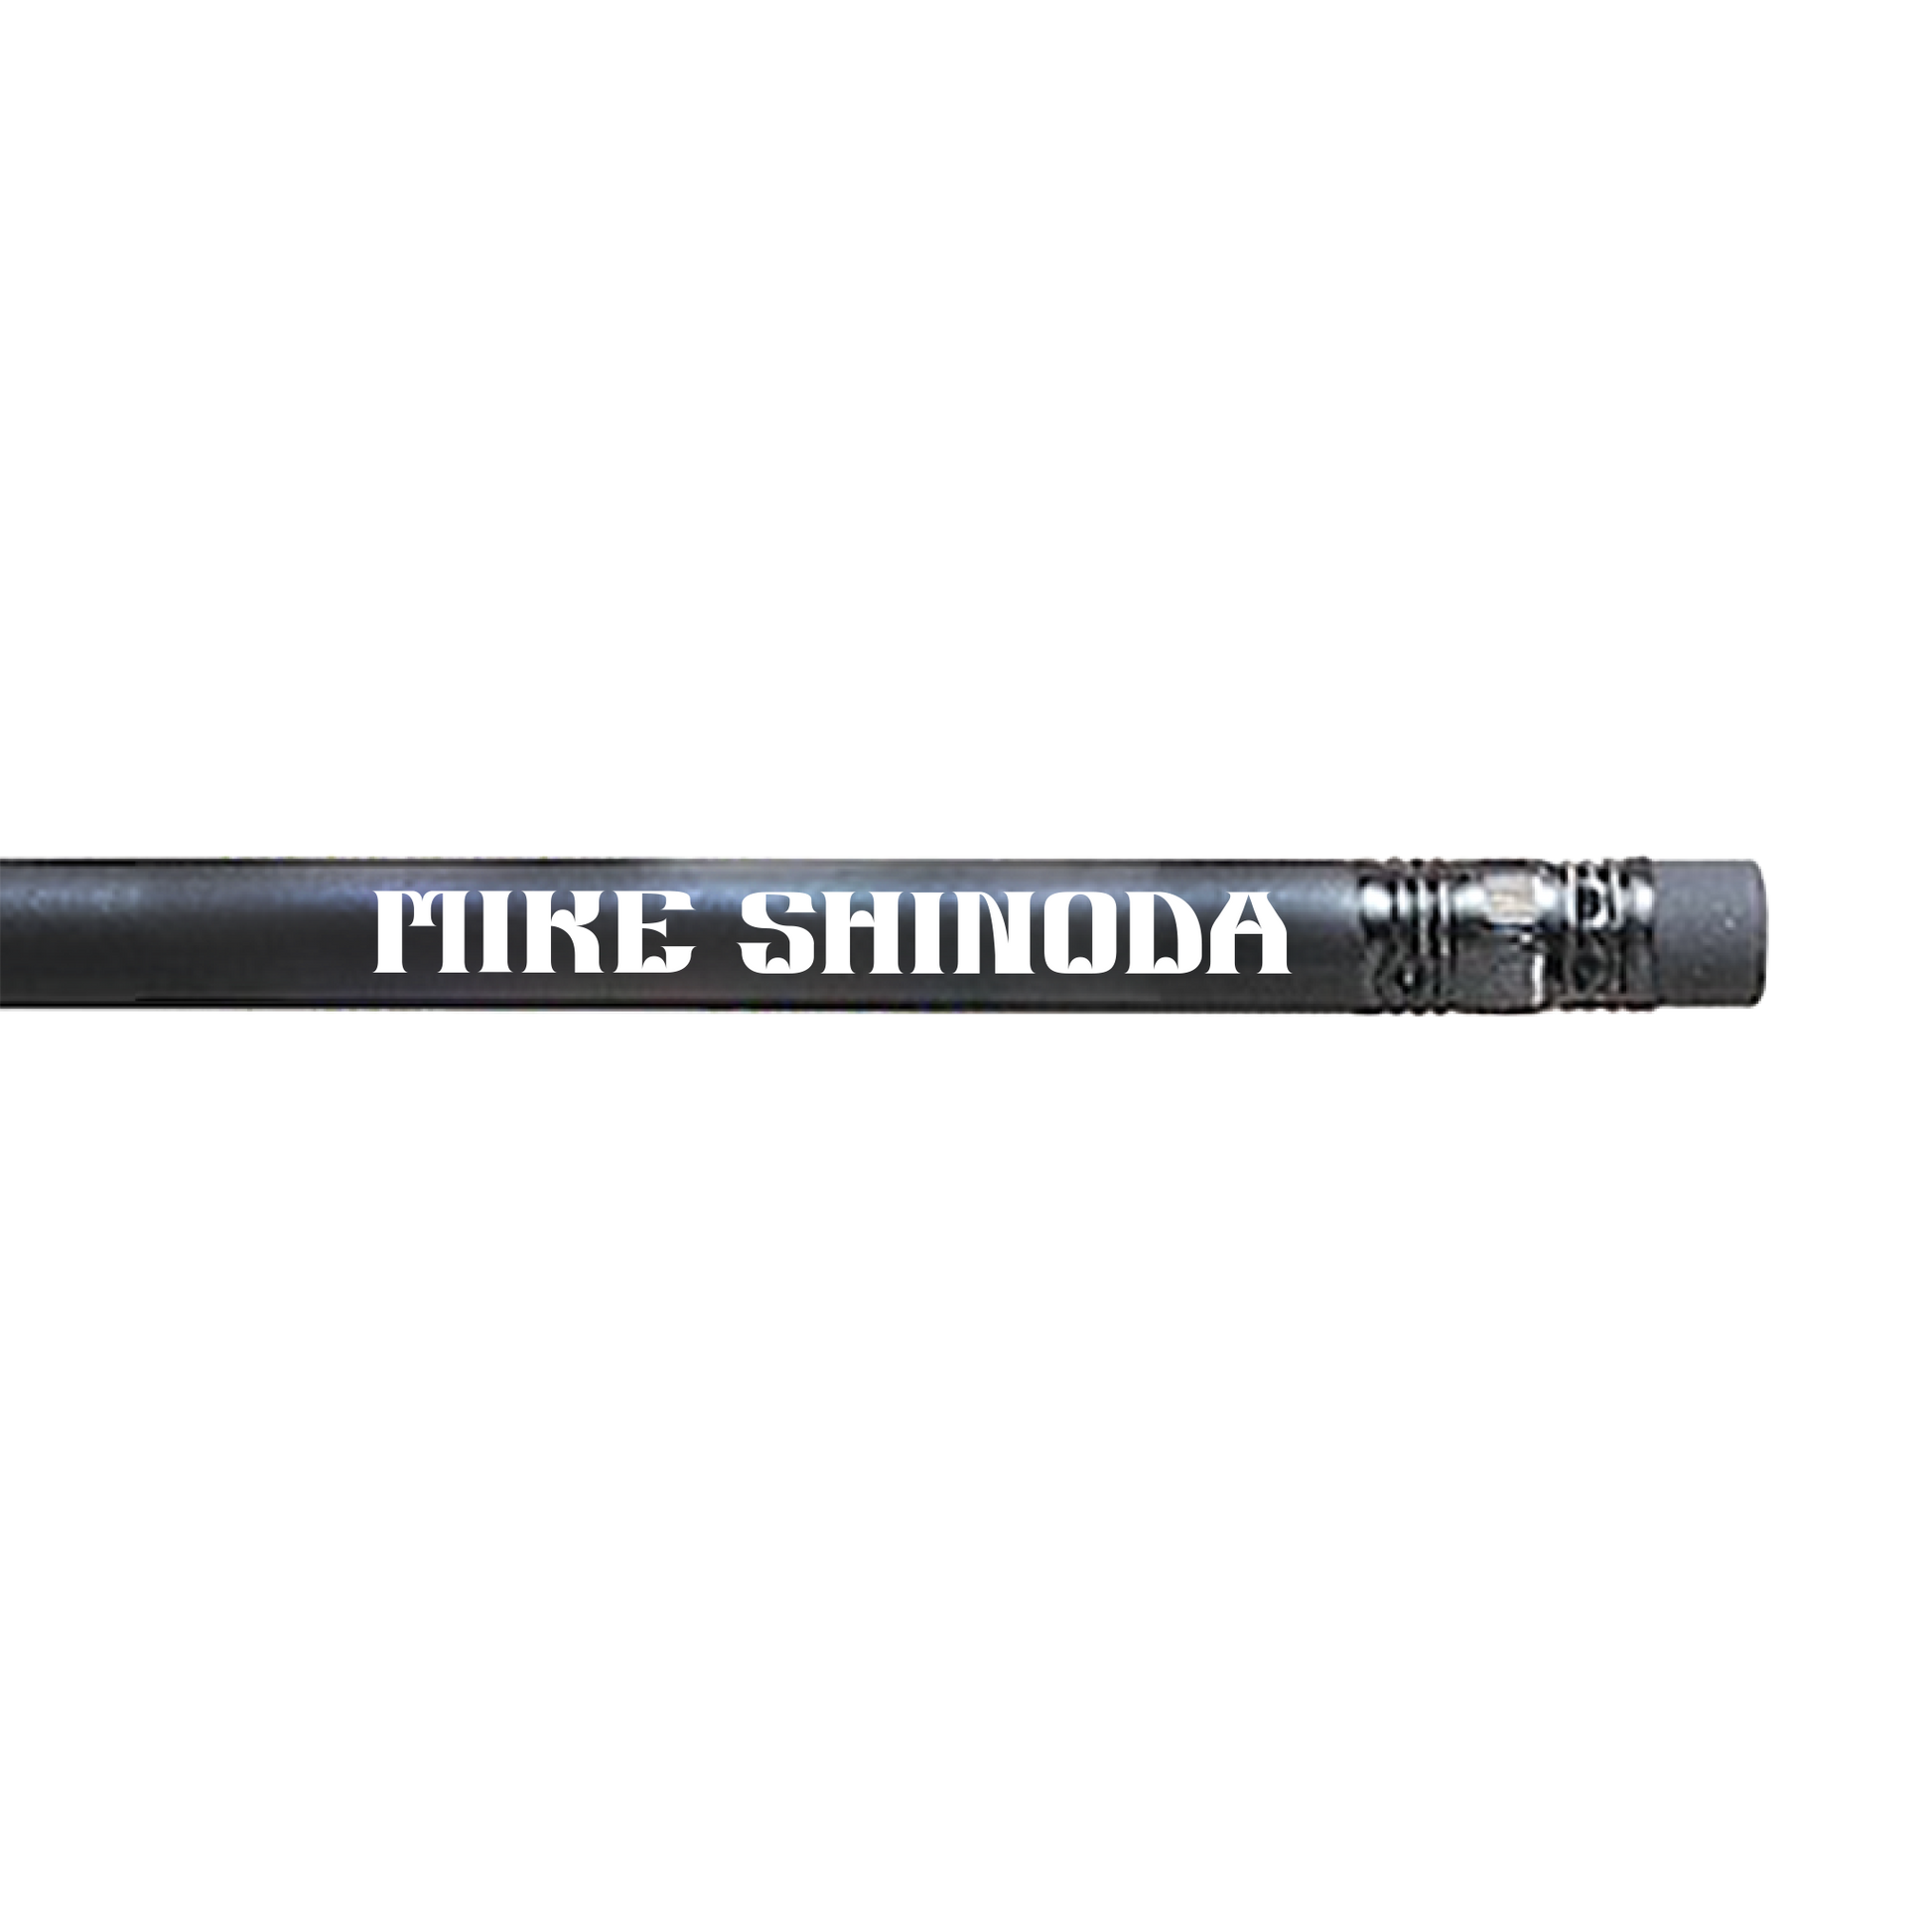 MS Graphite Pencil Set – Mike Shinoda